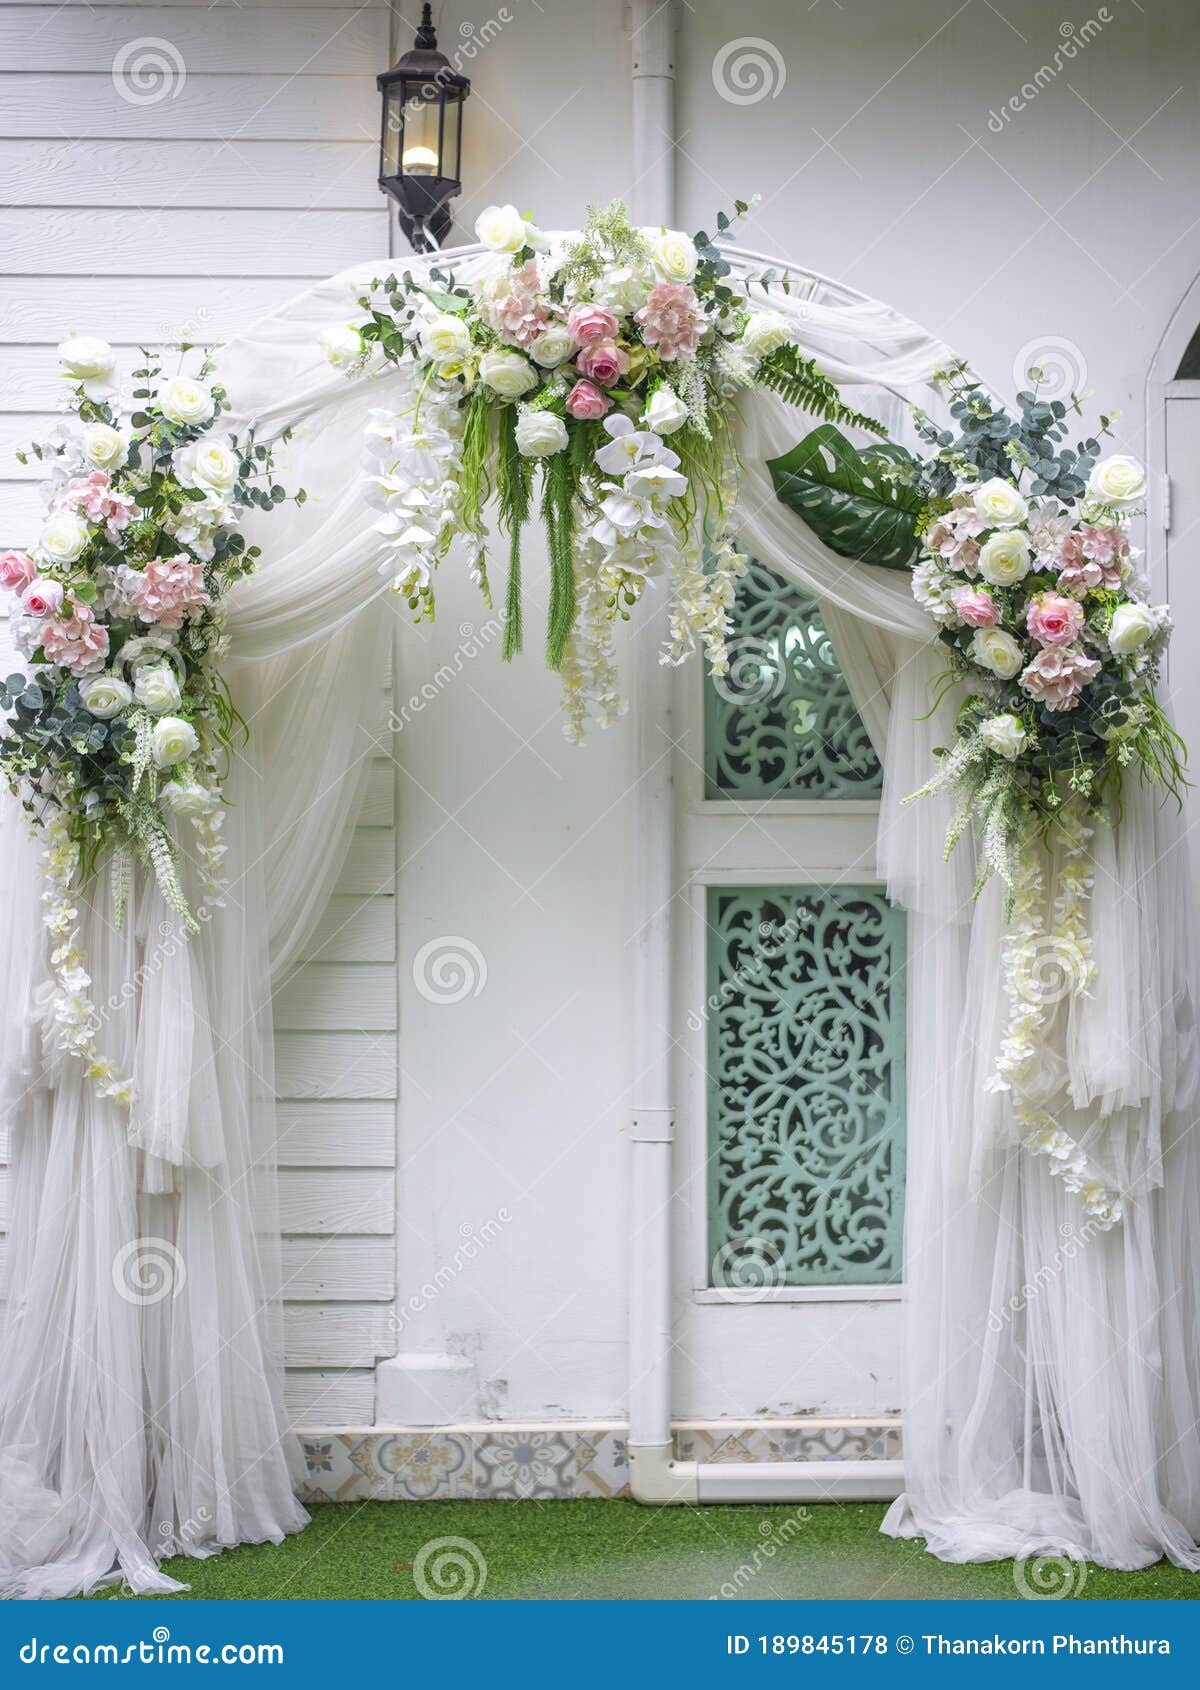 White Wedding Flowers and Wedding Decorations Stock Photo - Image of  beautiful, decorate: 189845178